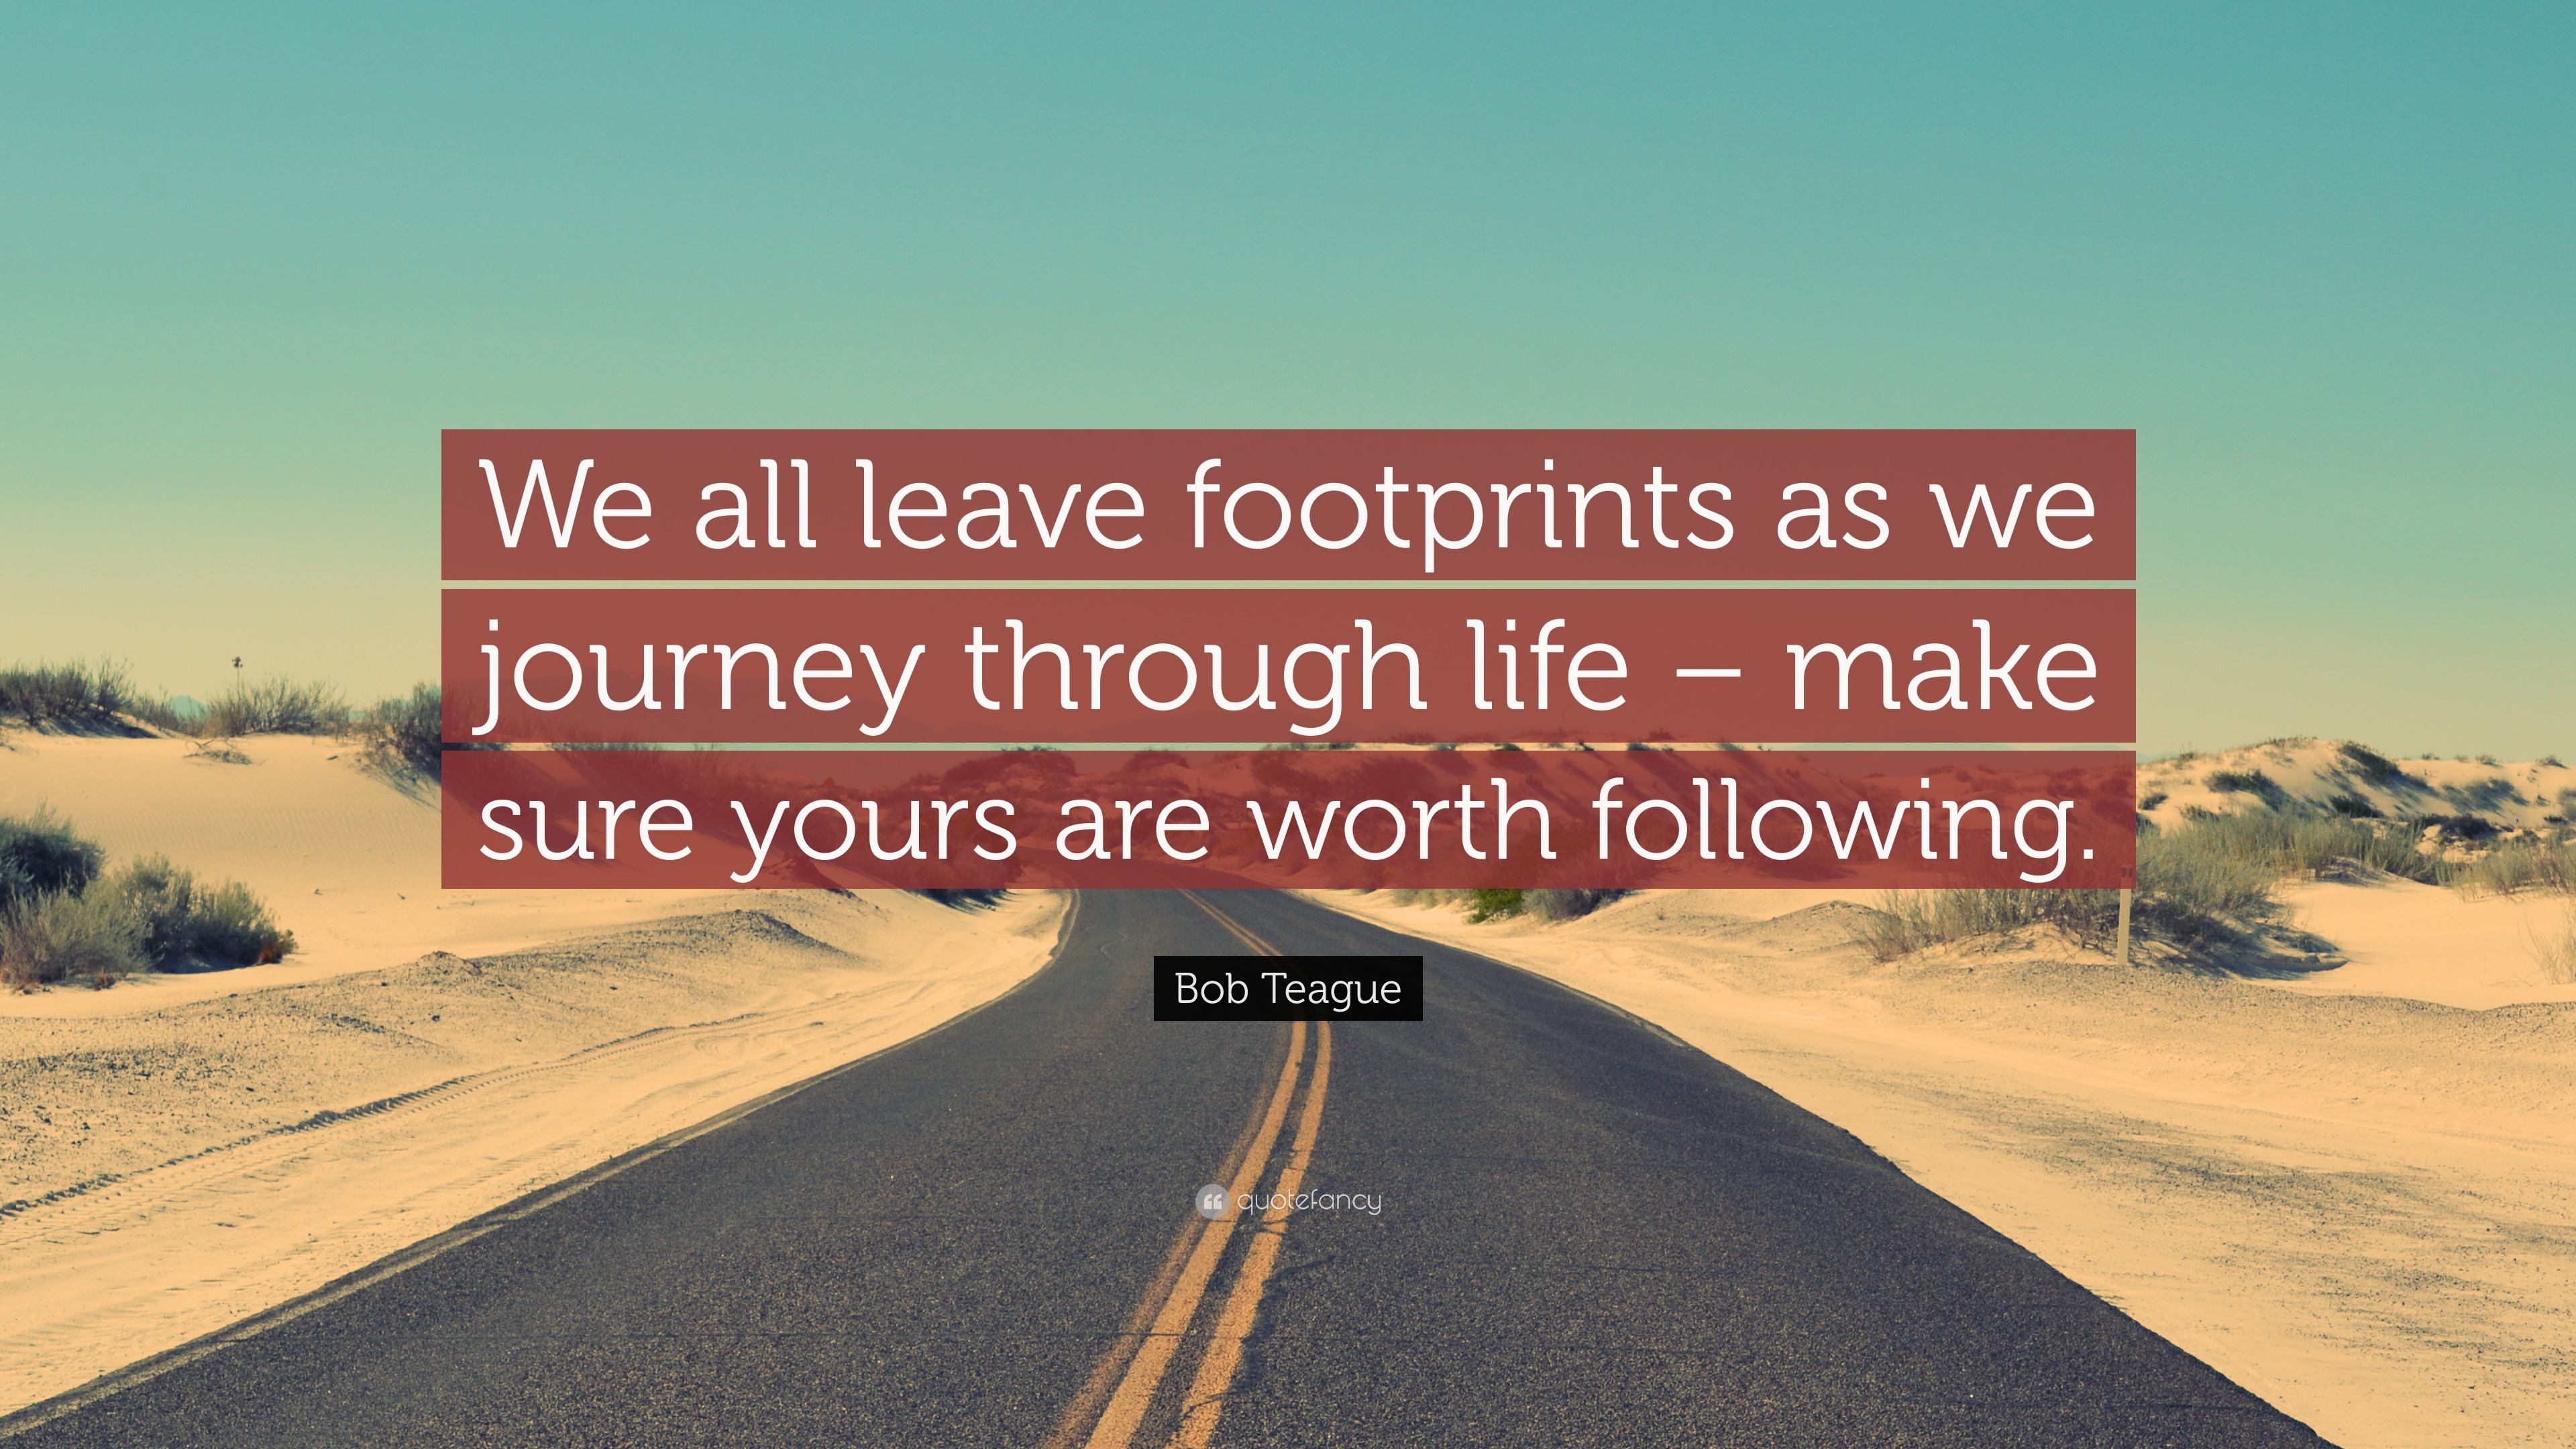 as you journey through life